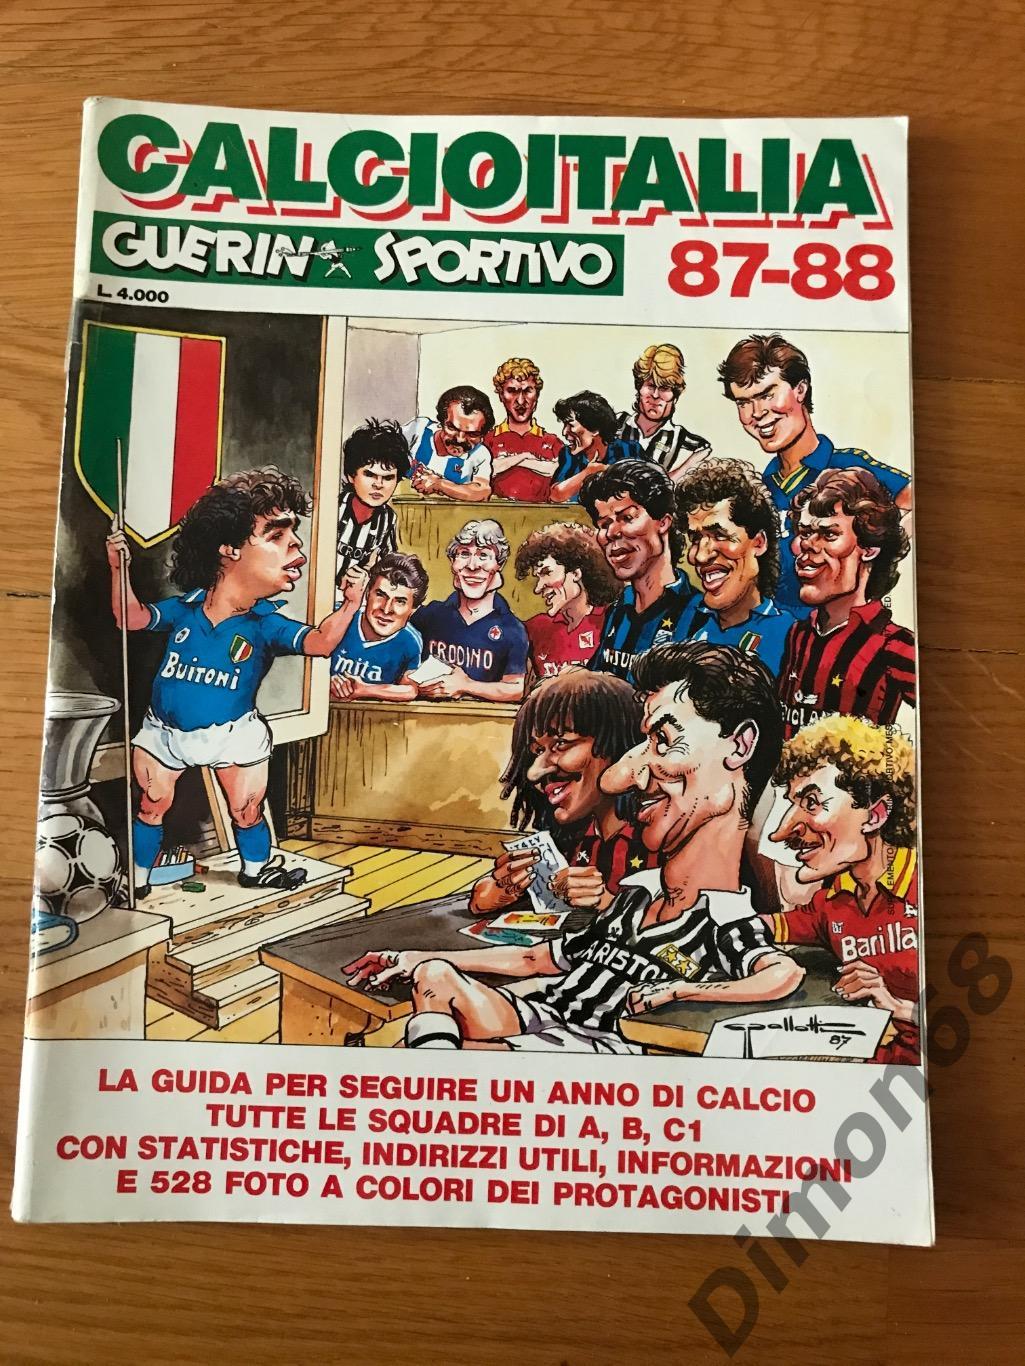 calcioitalia guerin sportivo чем италии сезон 87/88 в хорошем состоянии целый